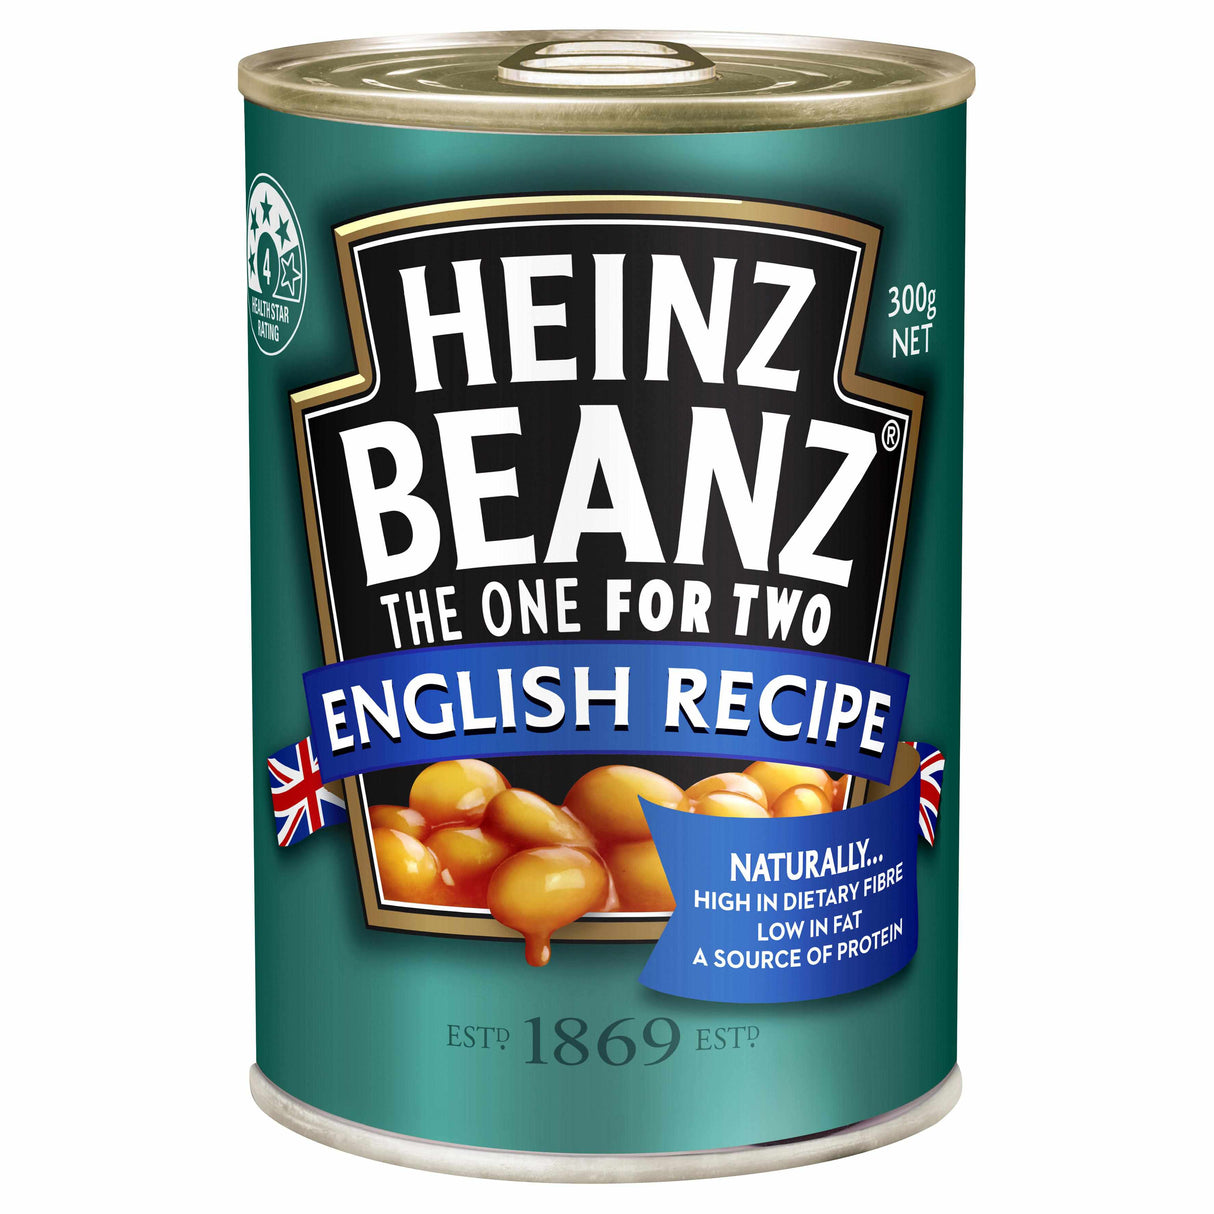 Heinz Beanz English Recipe 300g